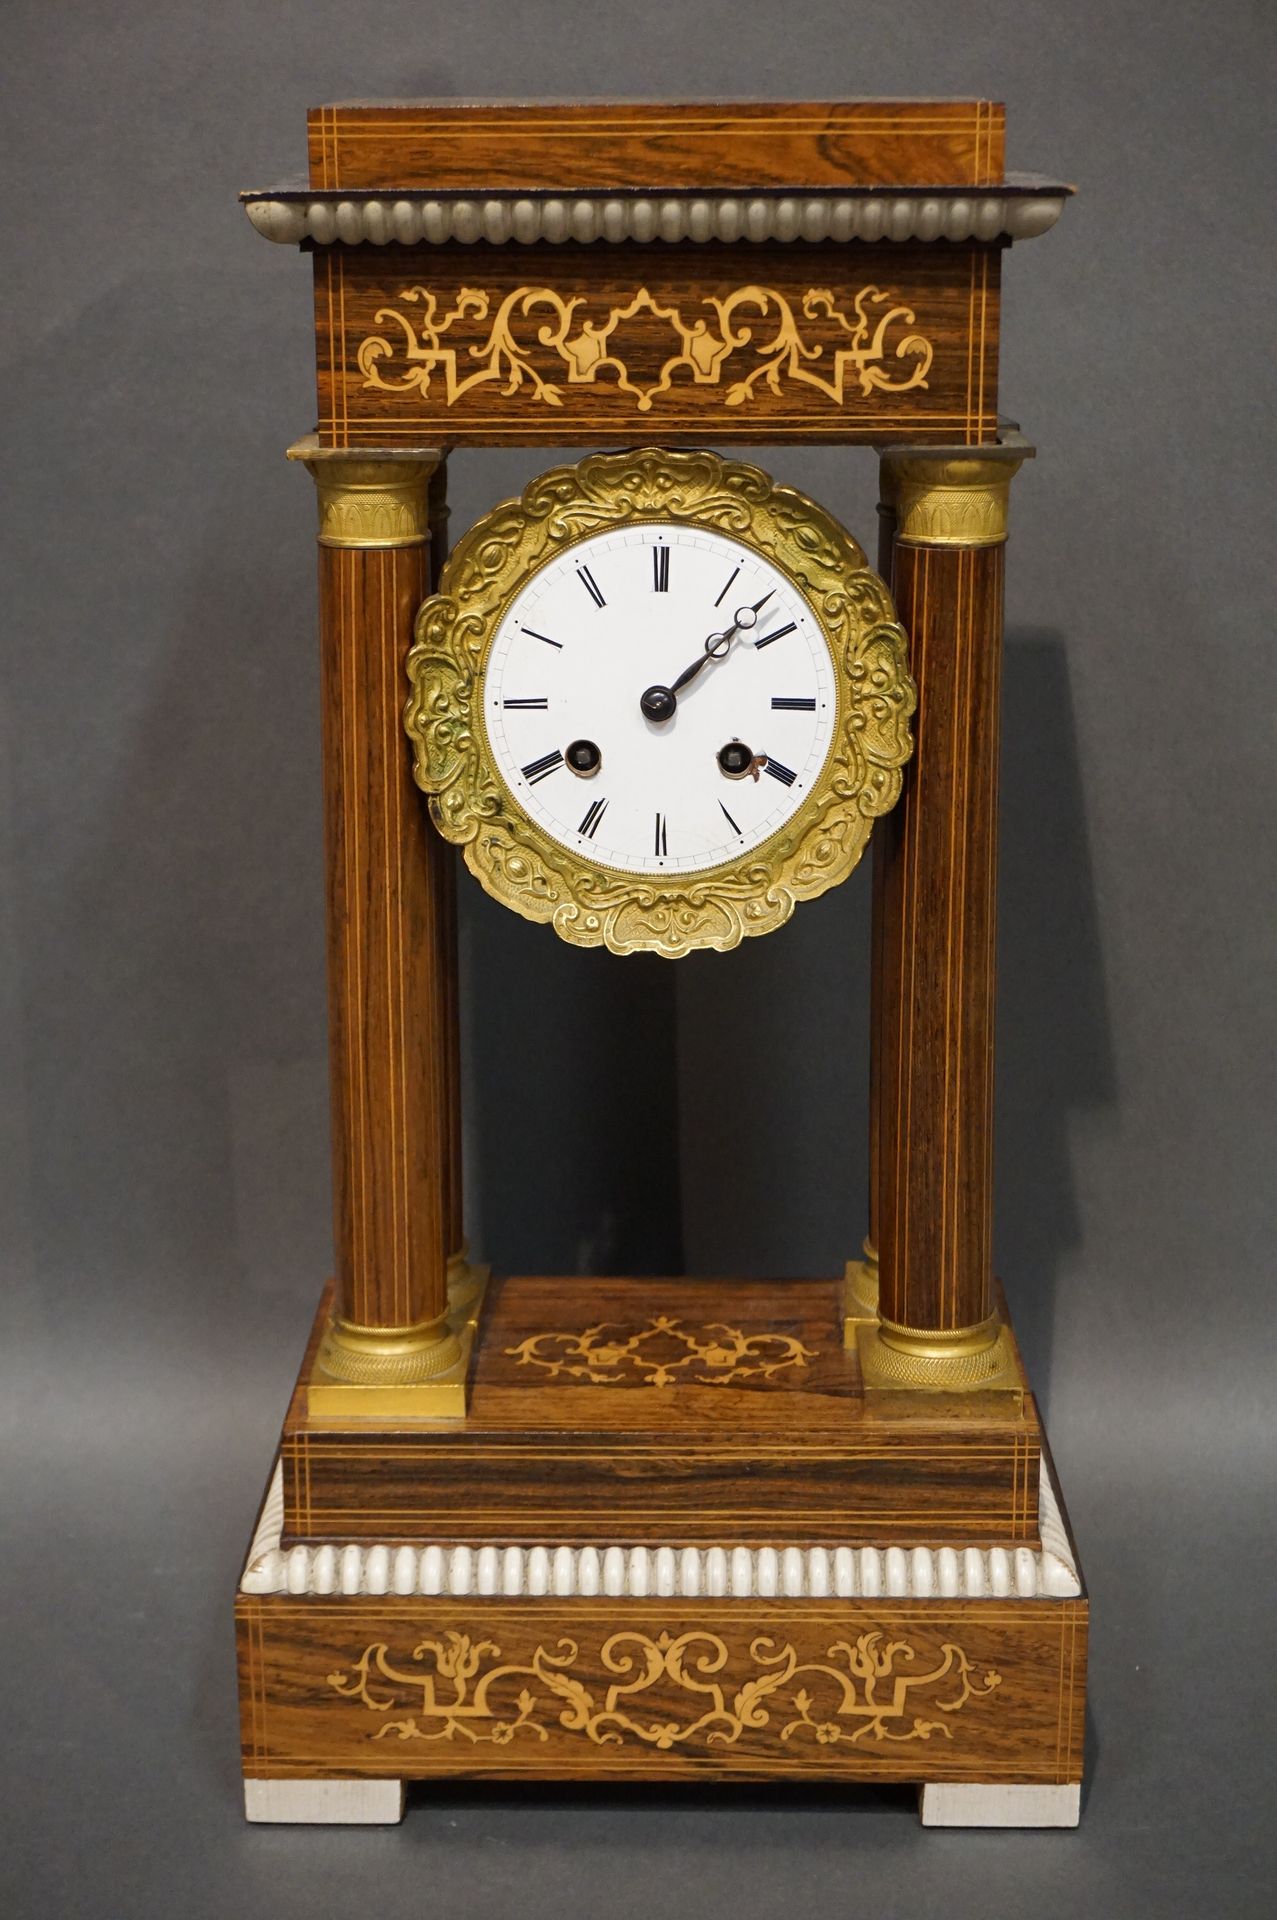 PENDULE 19世纪风格的柱式门廊钟，采用木皮和镶嵌工艺，44x22x13厘米